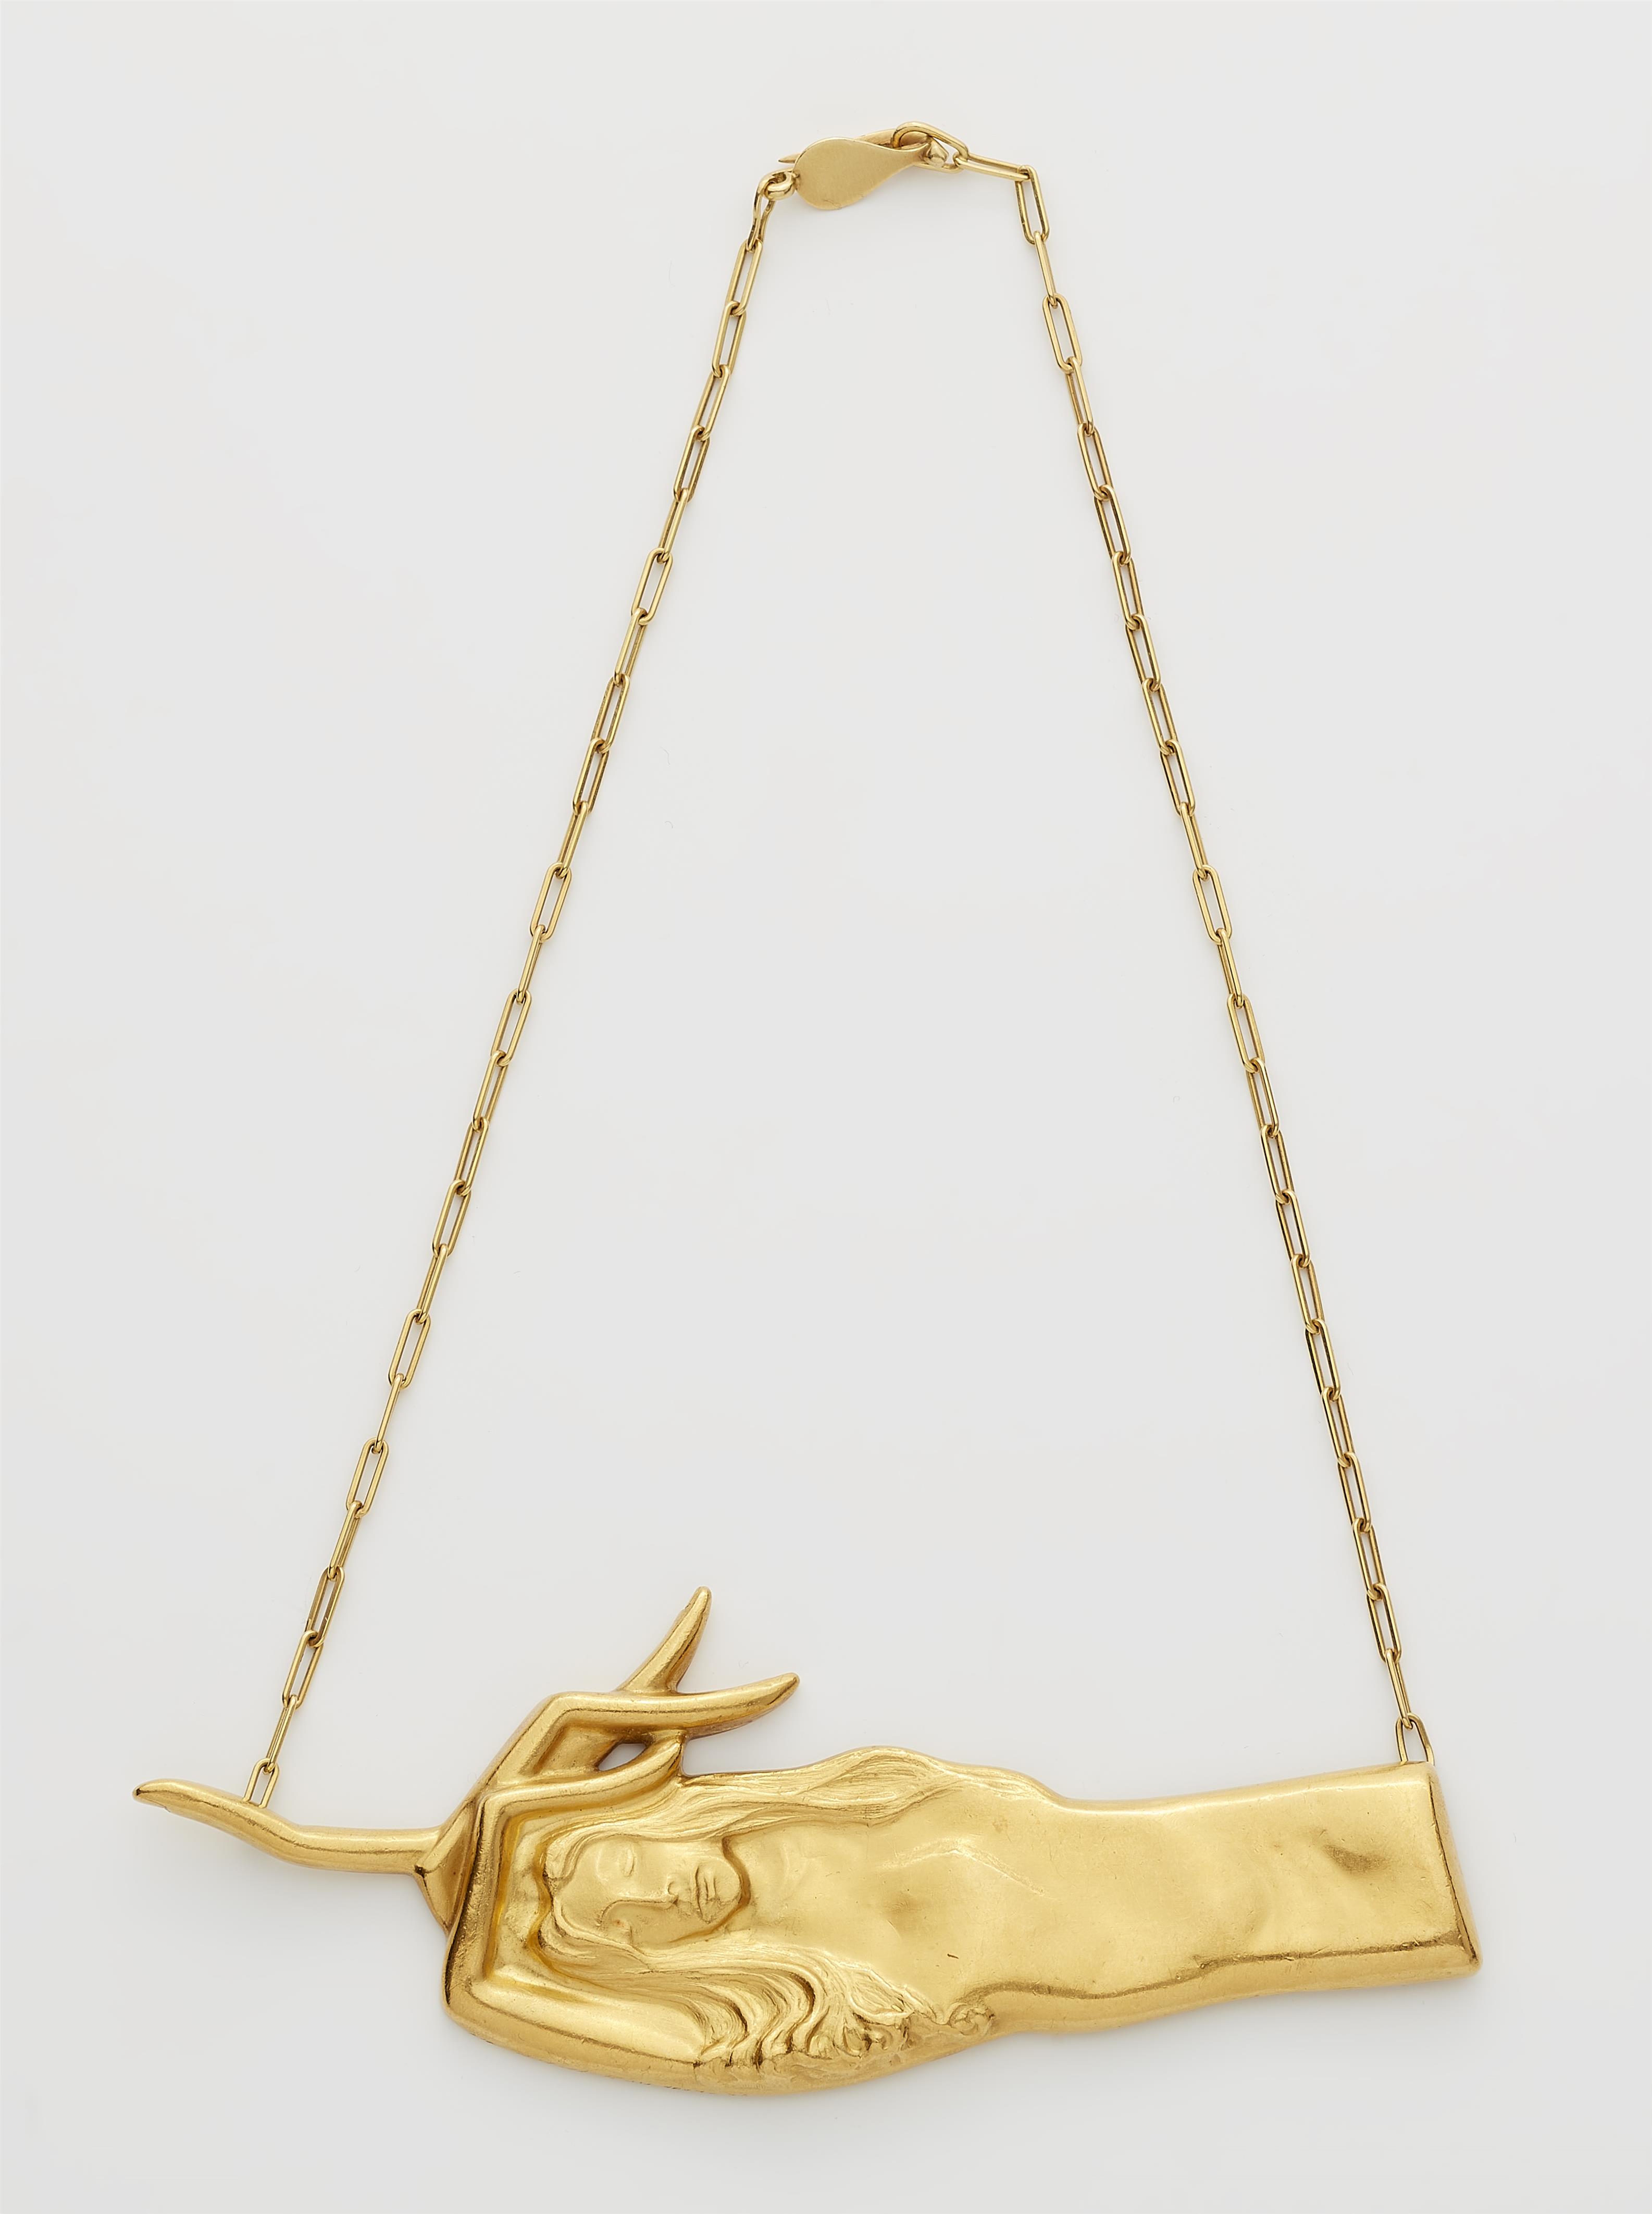 An 18k gold necklace with a signed 24k gold surrealistic pendant "Belle Main", exemplaire 3/9. Design: Man Ray, Paris 1937; Execution: GEM Montebello, Milan 1974. - image-1